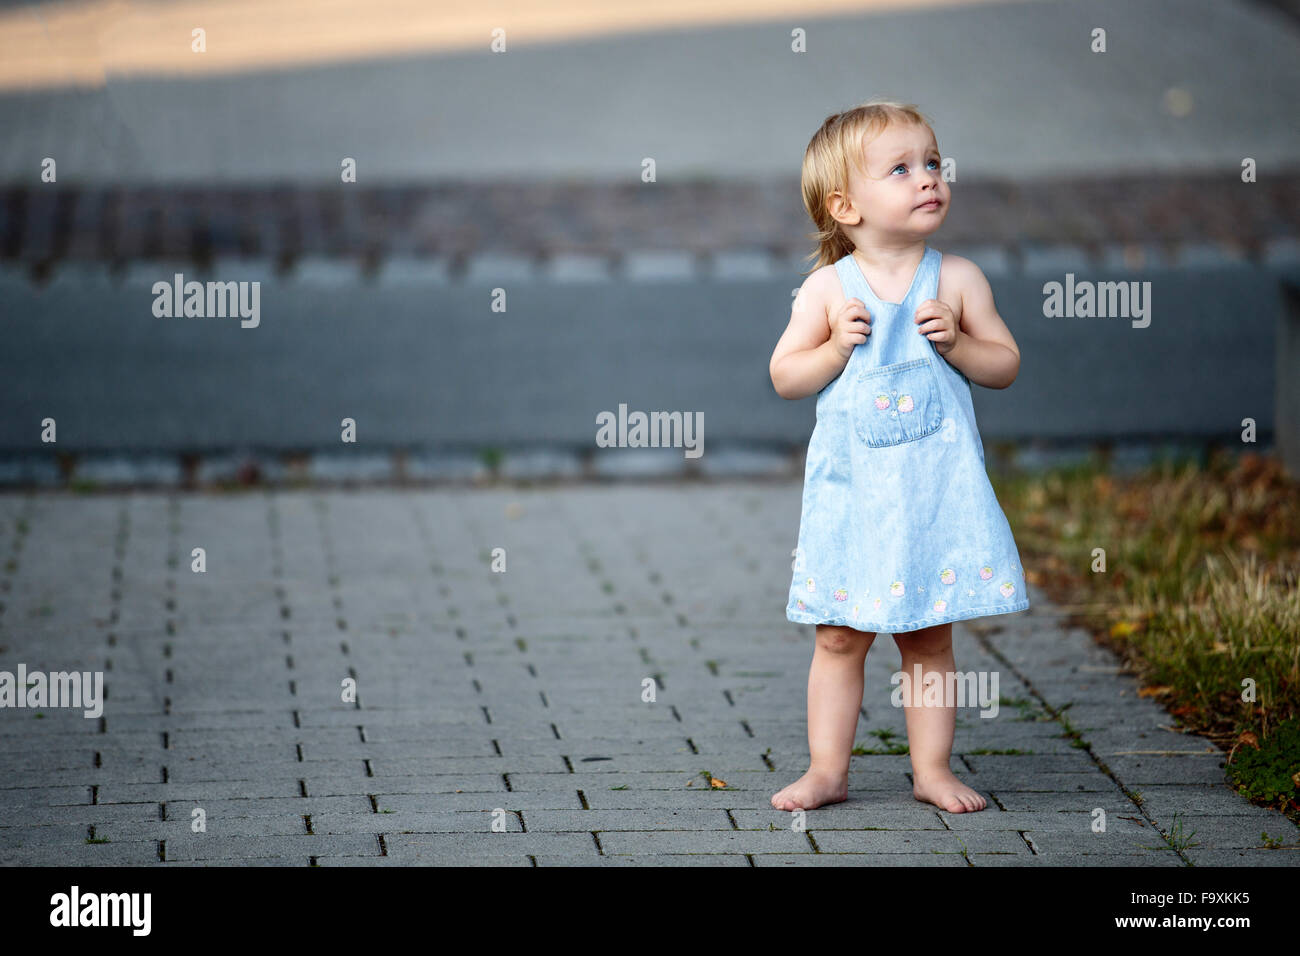 https://c8.alamy.com/comp/F9XKK5/barefoot-blond-little-girl-standing-on-pavement-looking-up-F9XKK5.jpg